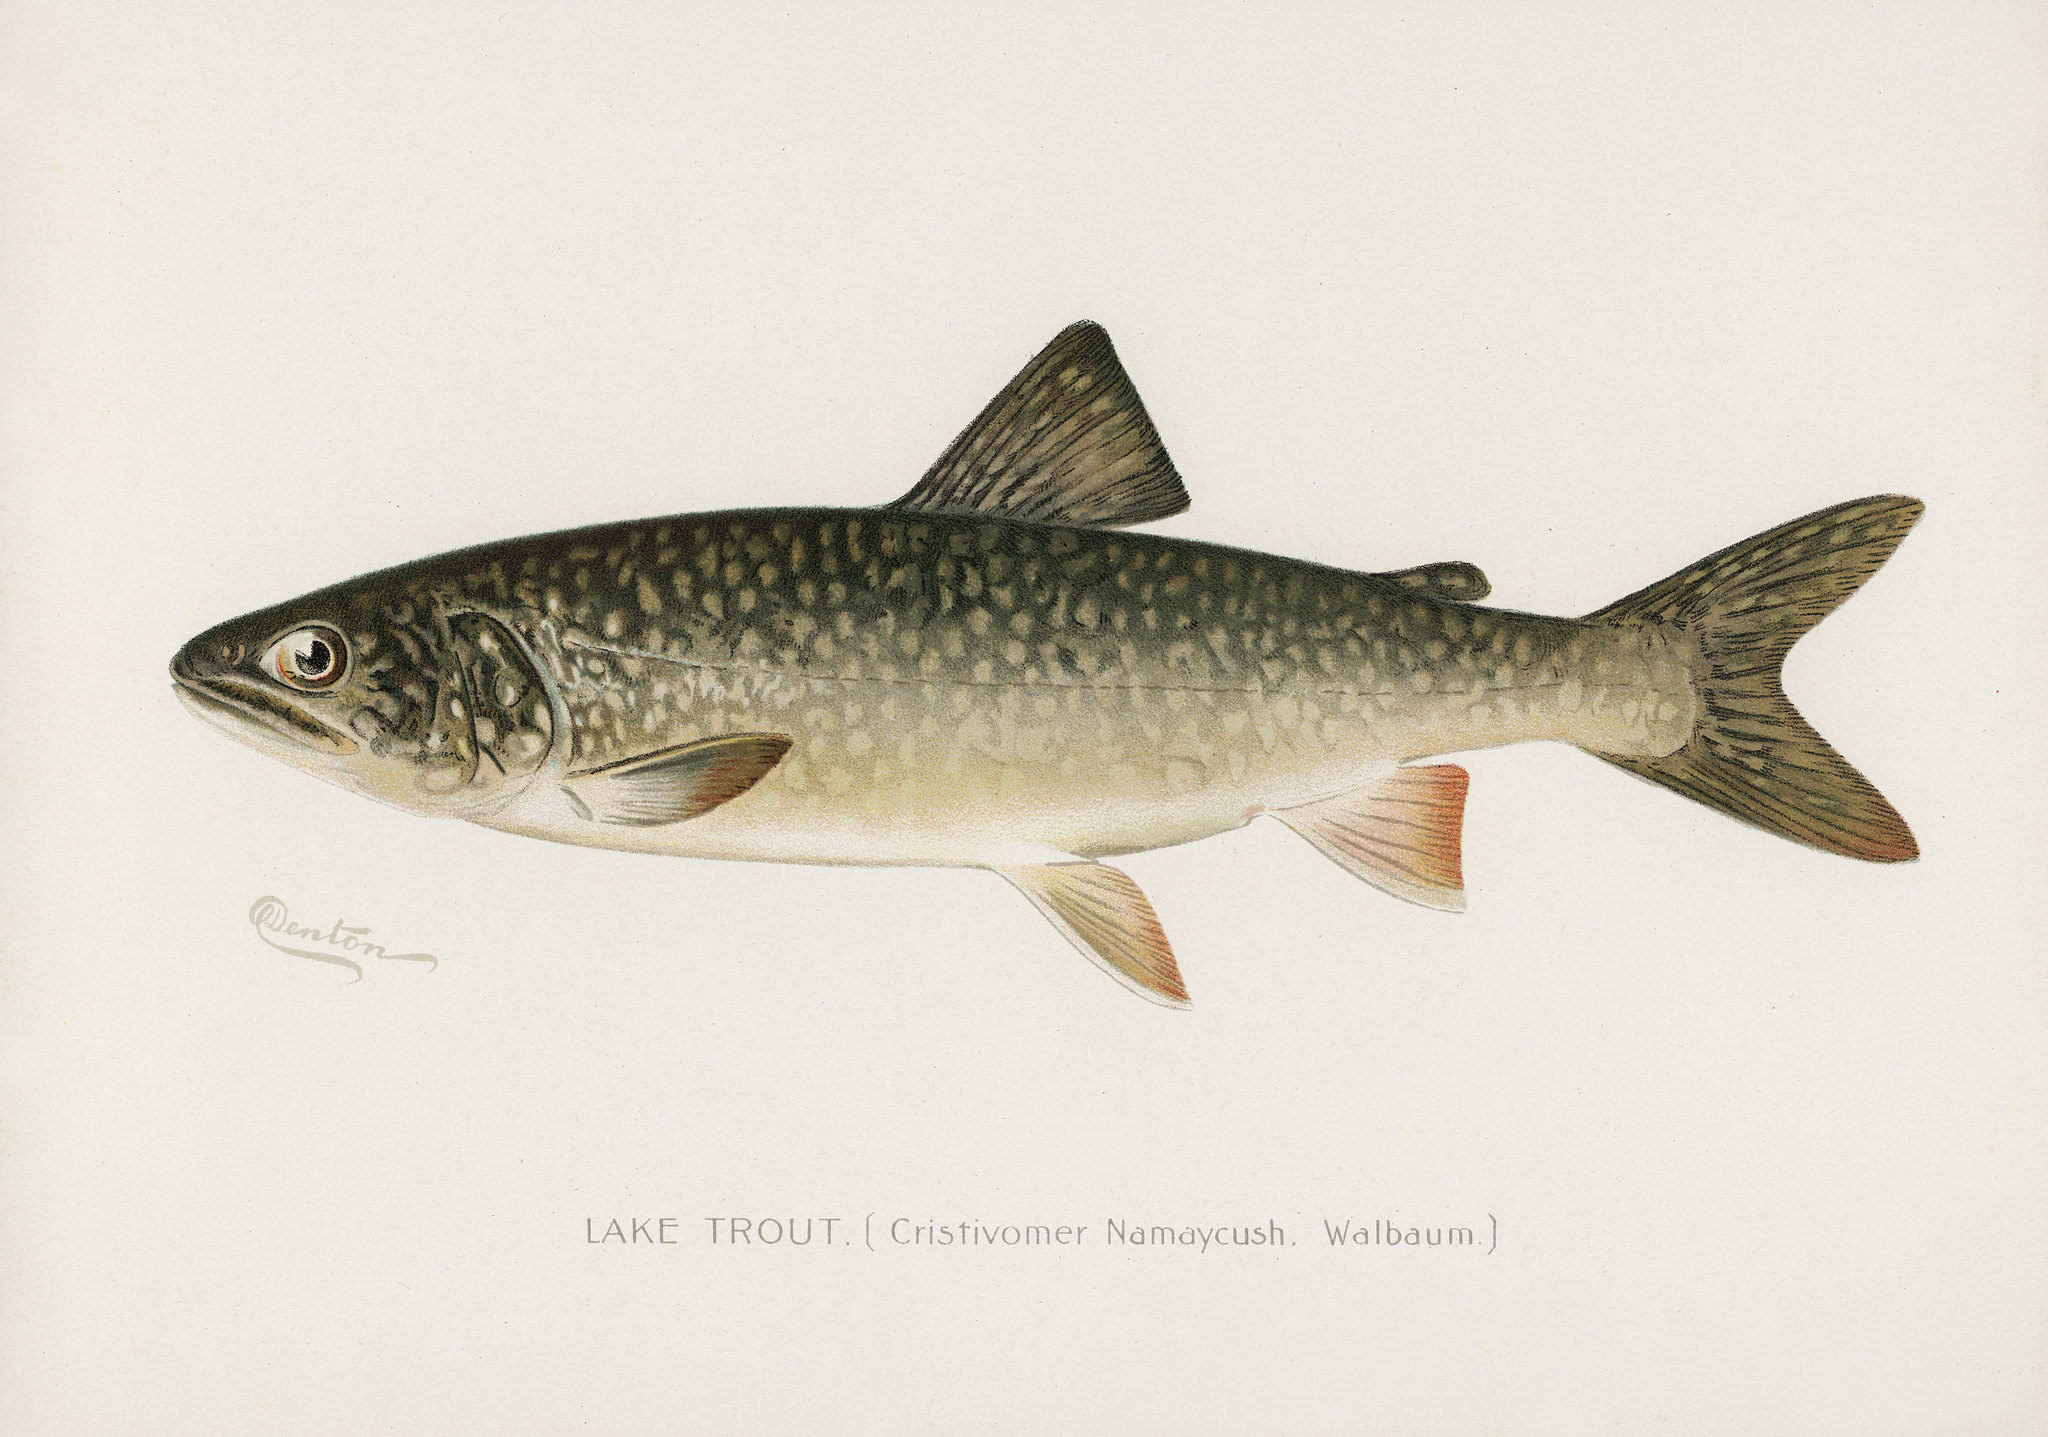 A vintage illustration of a lake trout